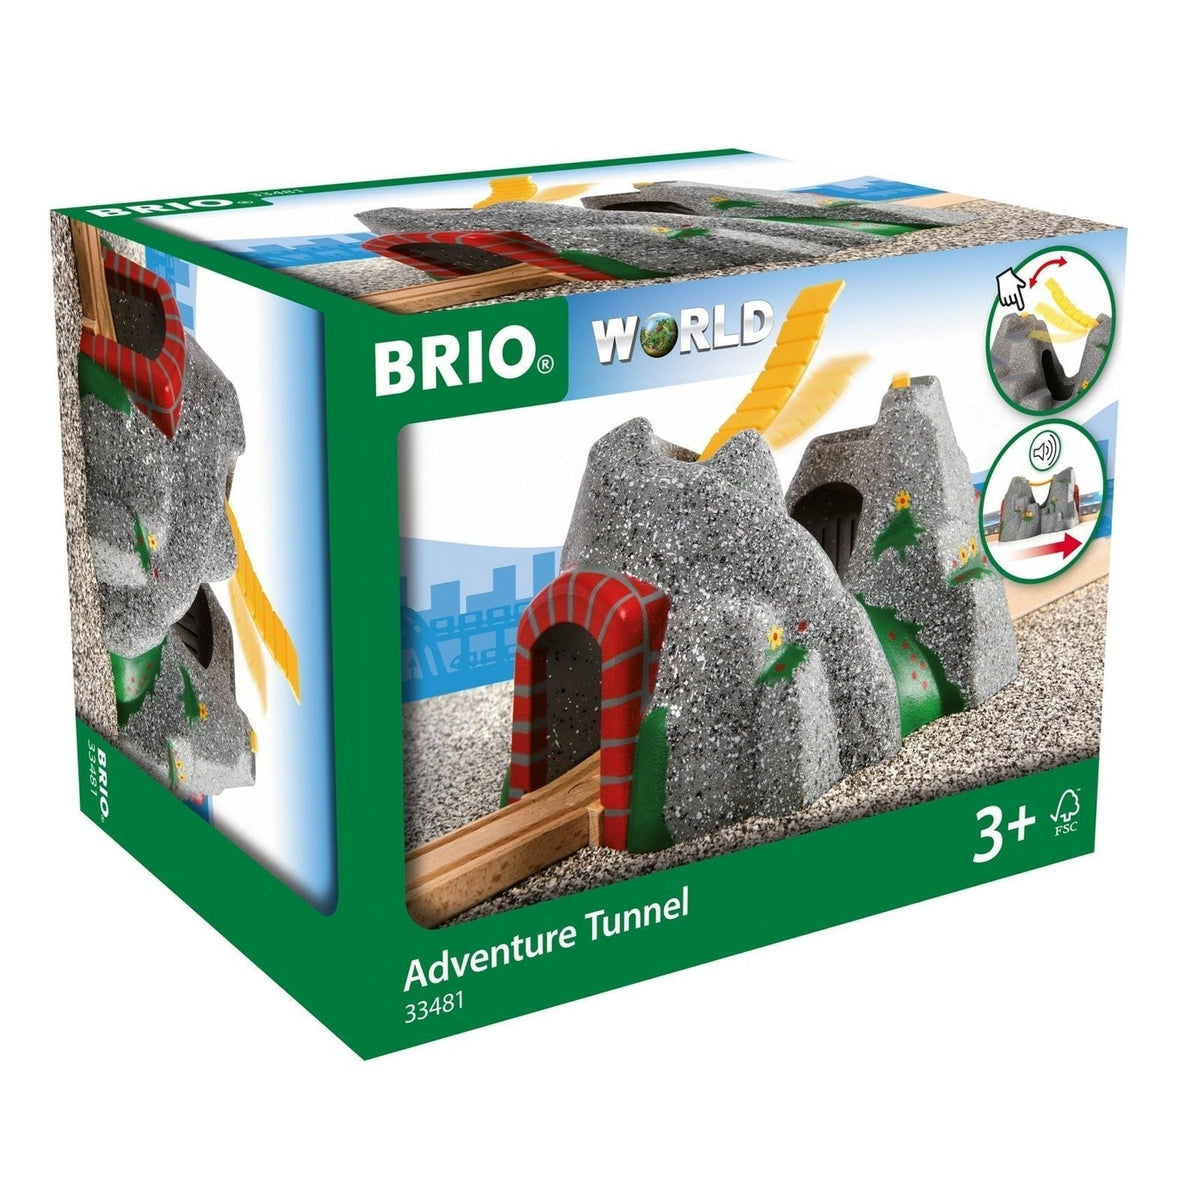 BRIO Tunnel - Adventure Tunnel - Toybox Tales